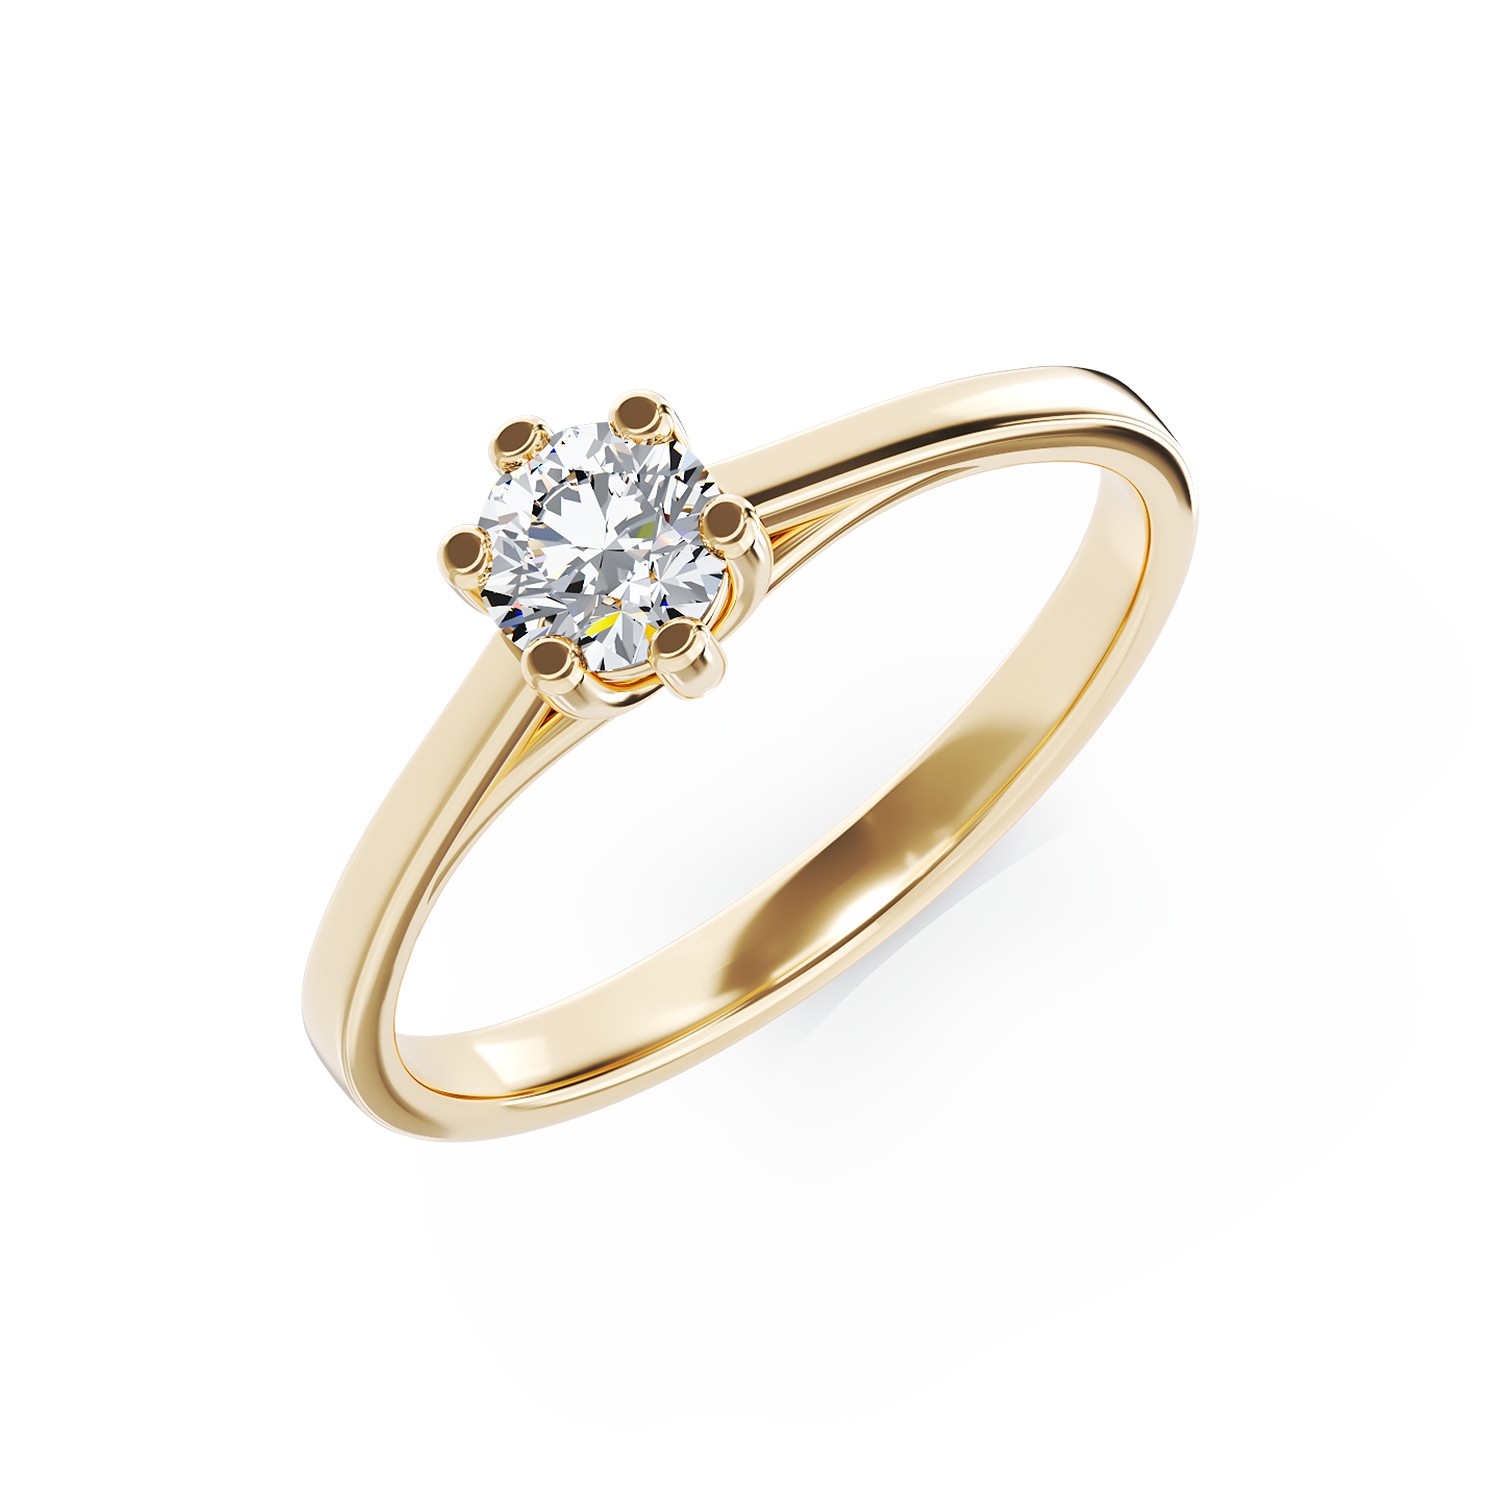 Inel de logodna din aur galben de 18K cu un diamant solitaire de 0.15ct